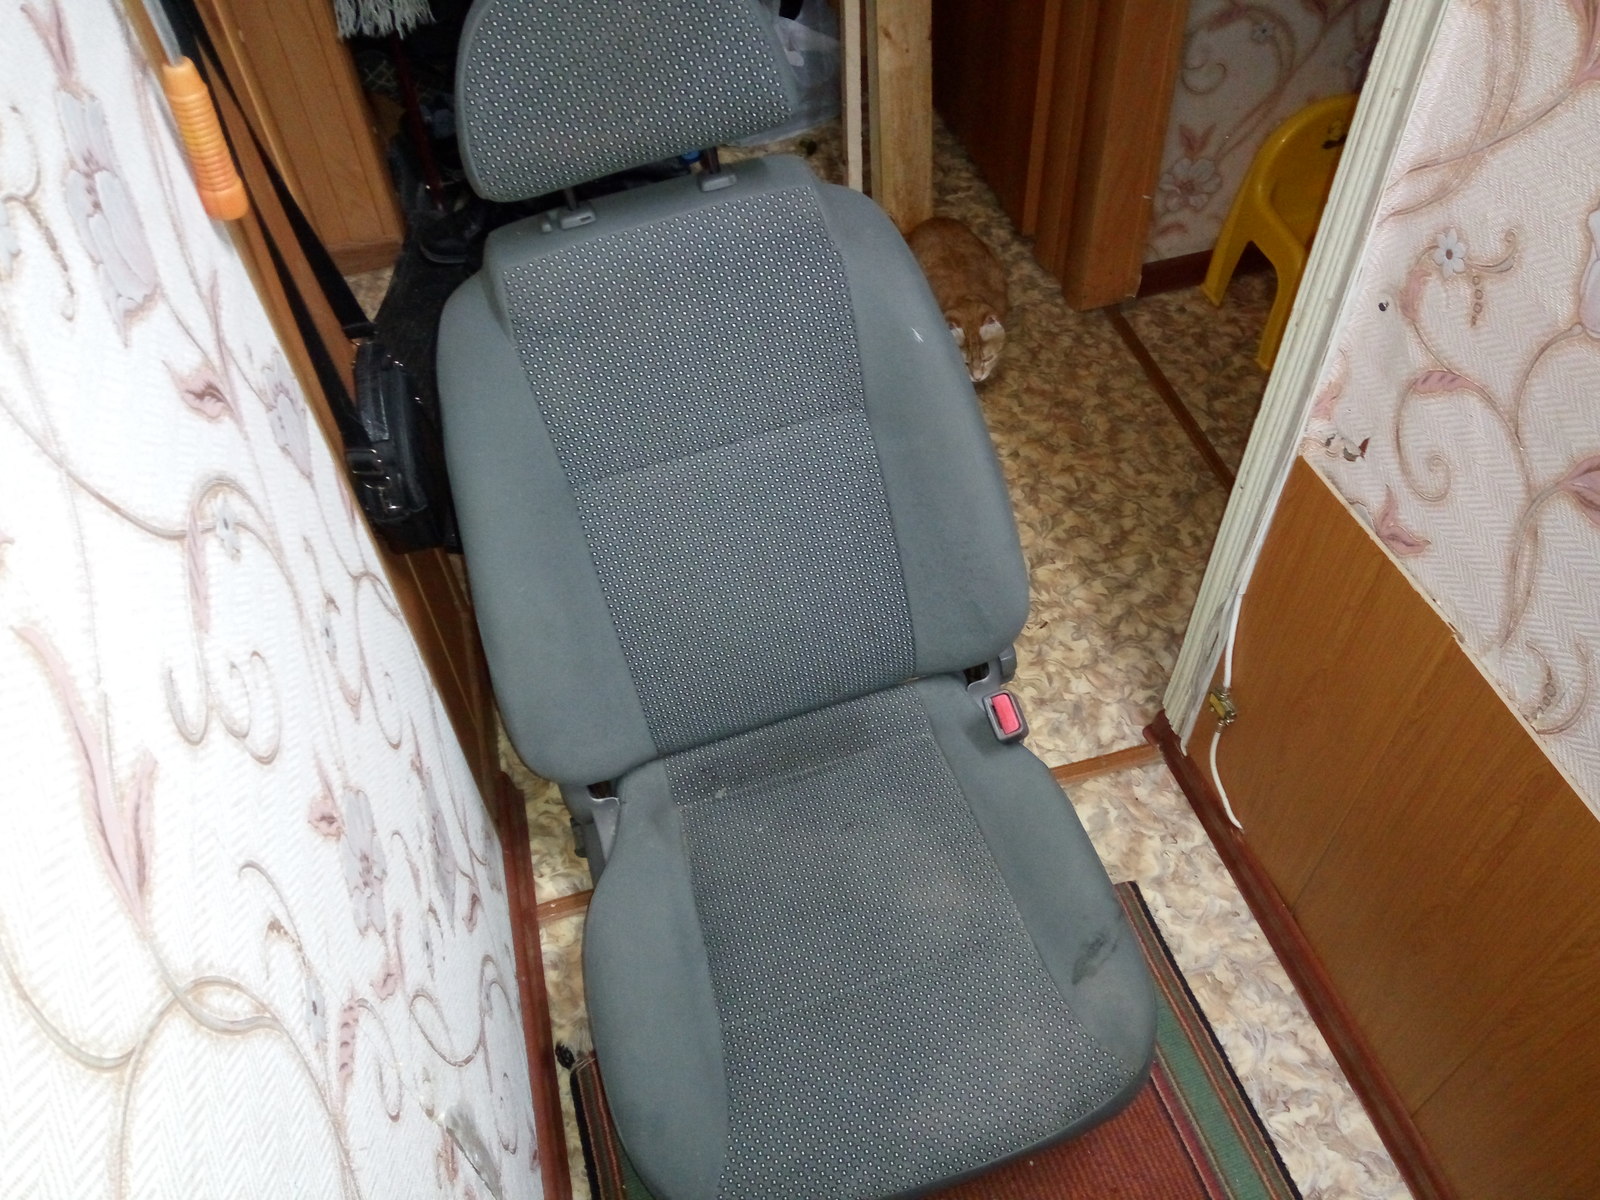 Ремонт сидений автомобиля своими руками|Блог магазина prachka-mira.ru